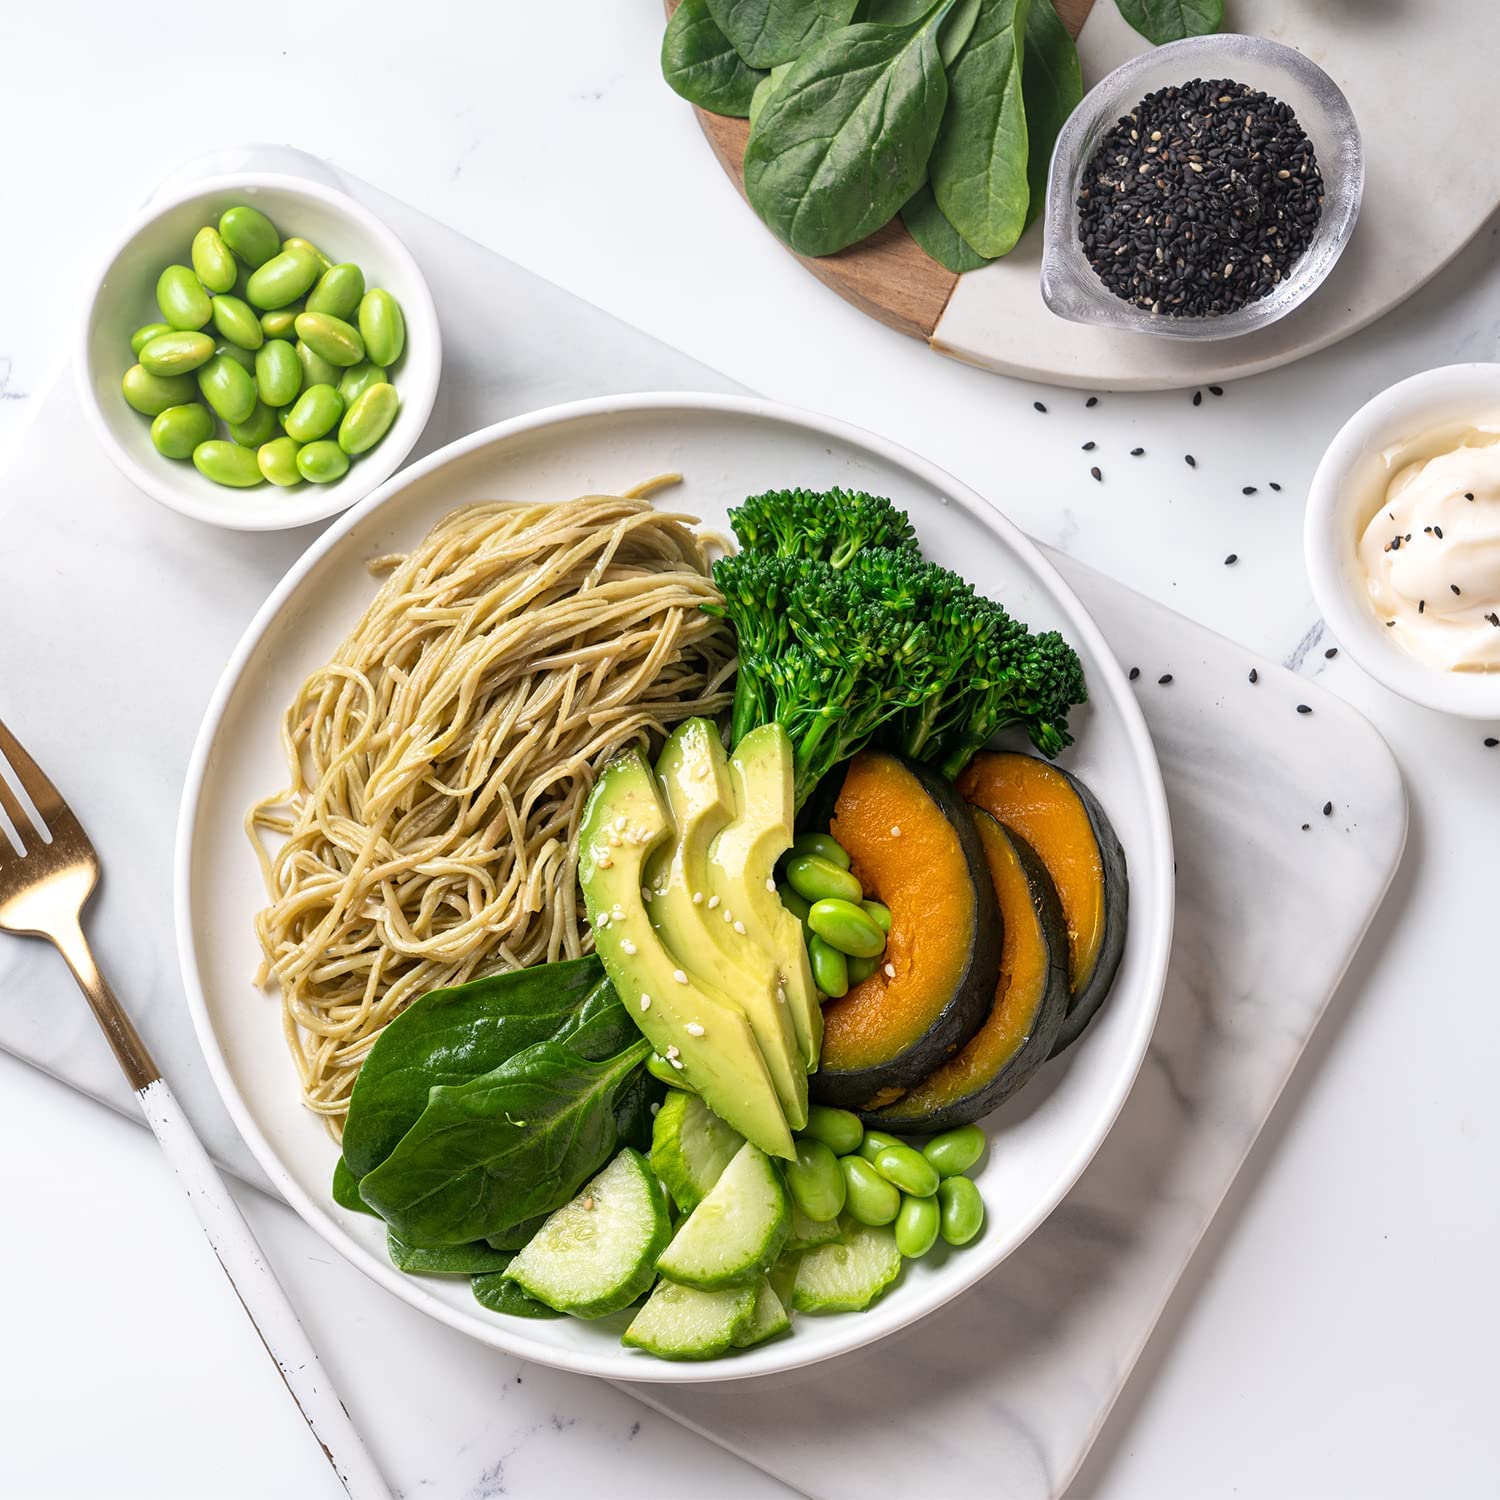 100% organic vegan edamame pasta keto friendly low carbs high protein wholesome healthy noodles gluten free spaghetti